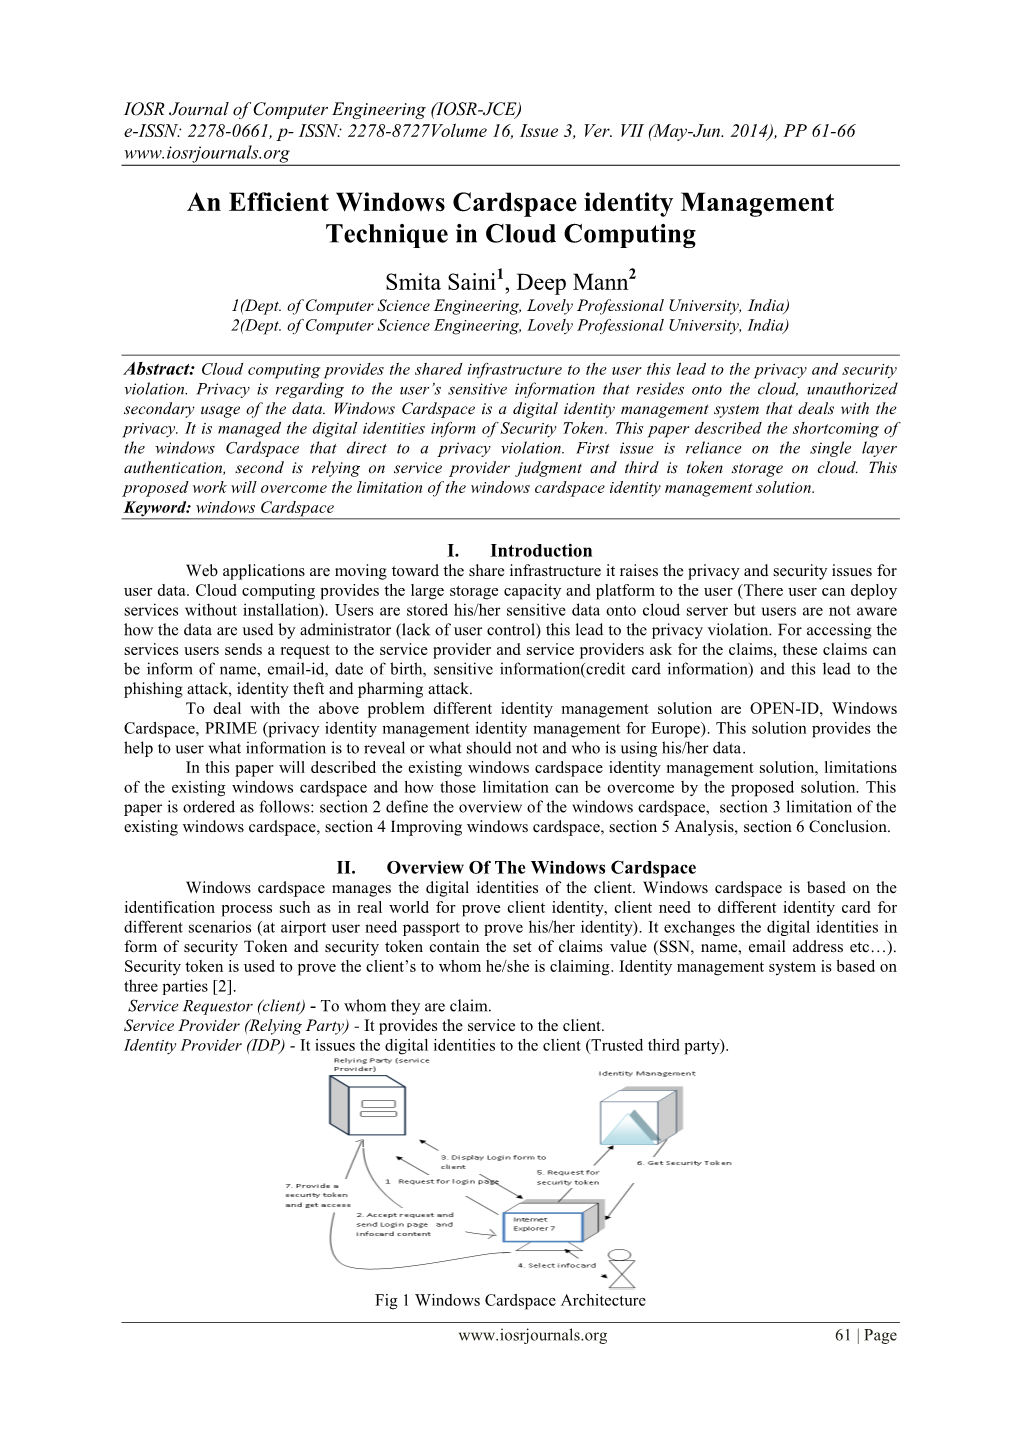 An Efficient Windows Cardspace Identity Management Technique in Cloud Computing